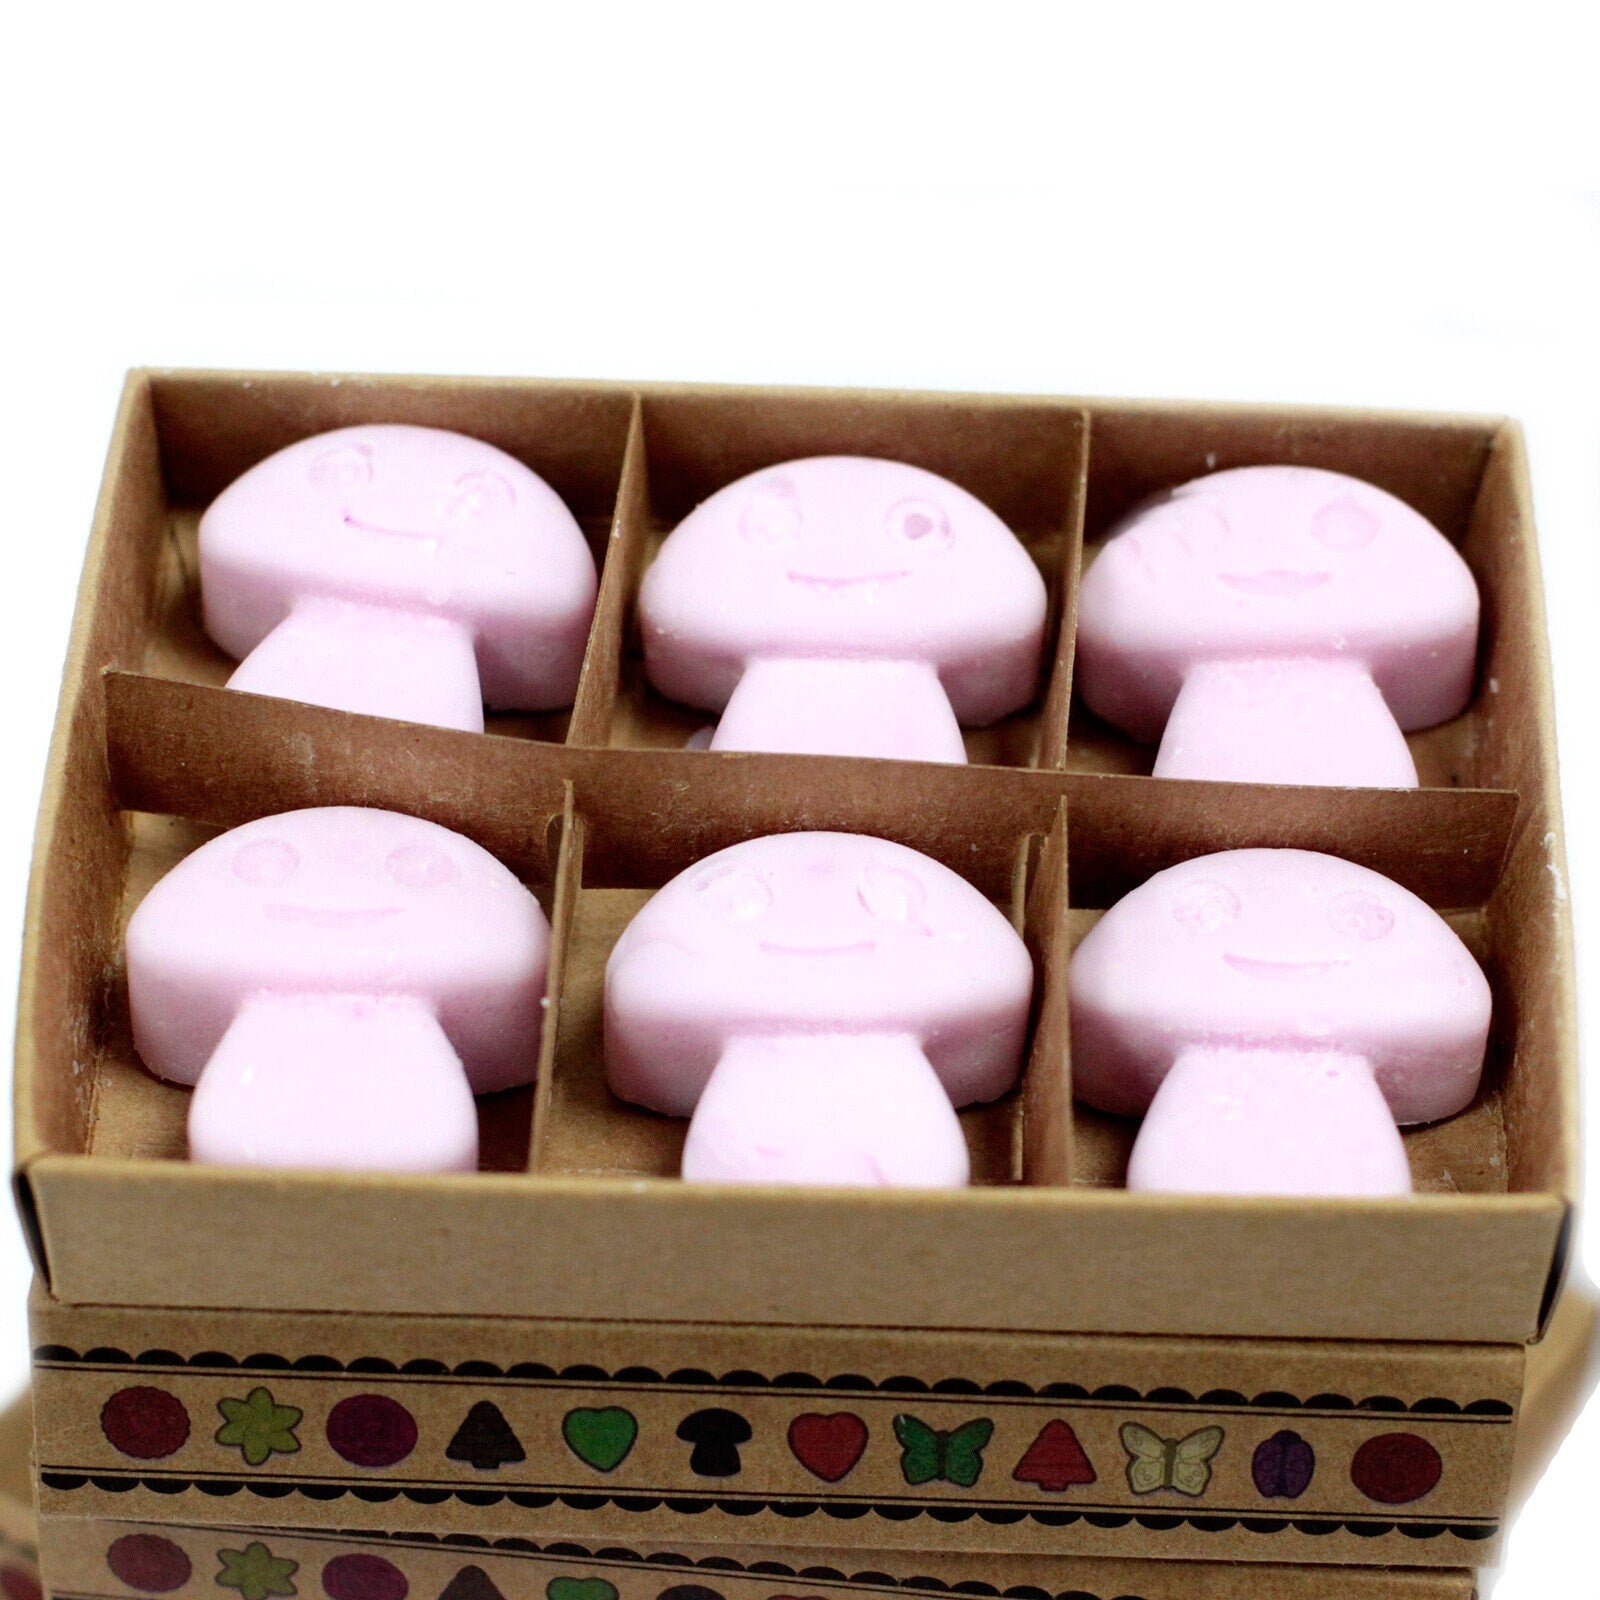 Box of 6 Oil Burner hand-made Soy Wax Melts - Ylang Ylang essential oil in display box Wonkey Donkey Bazaar